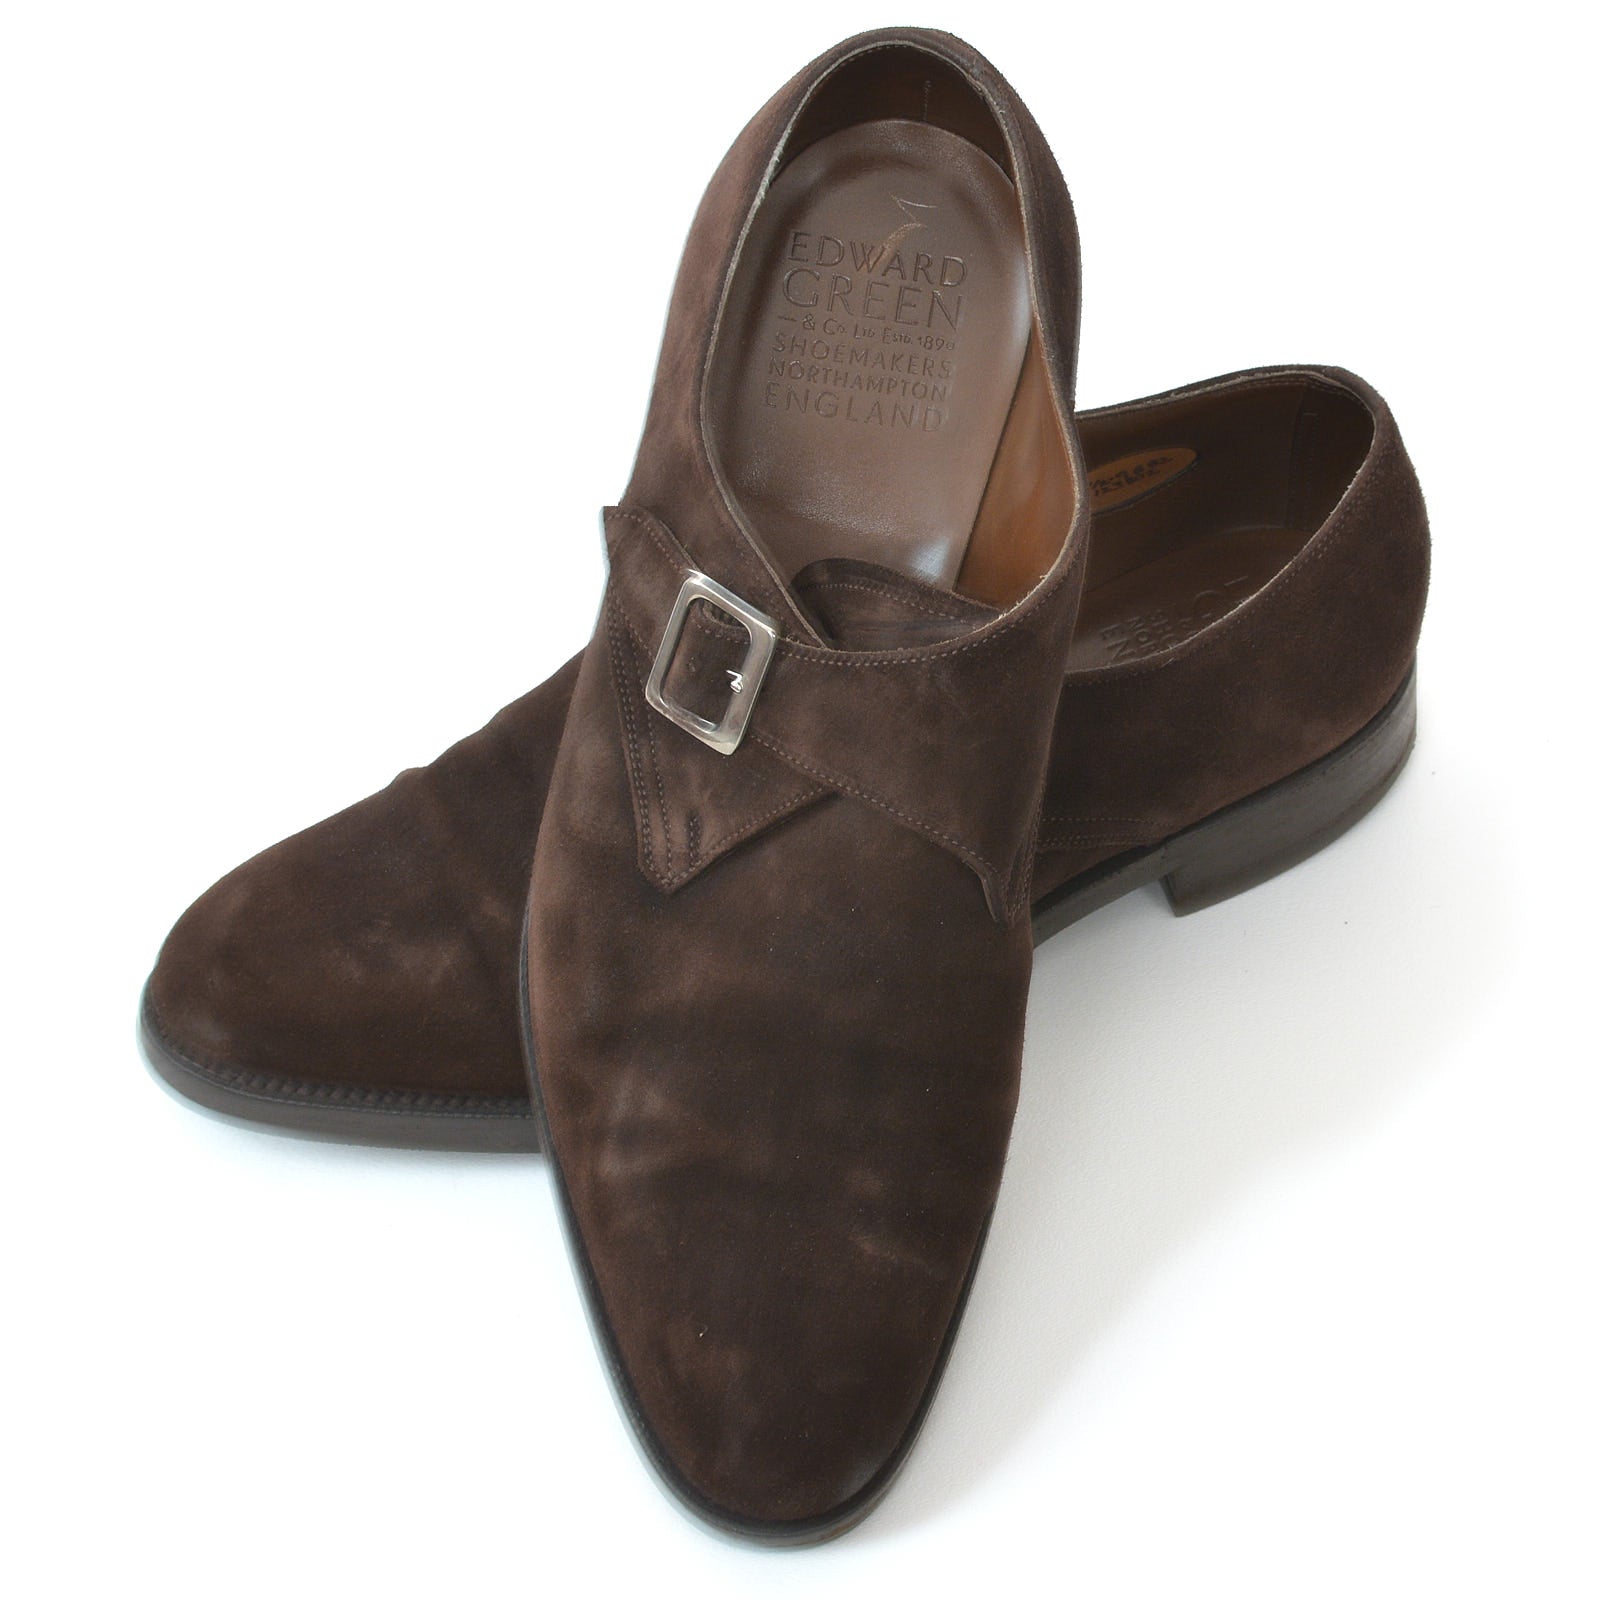 EDWARD GREEN Mercer Last 82 Mink Suede Leather Single Monk Dress Shoes UK 8.5 US 9 EDWARD GREEN